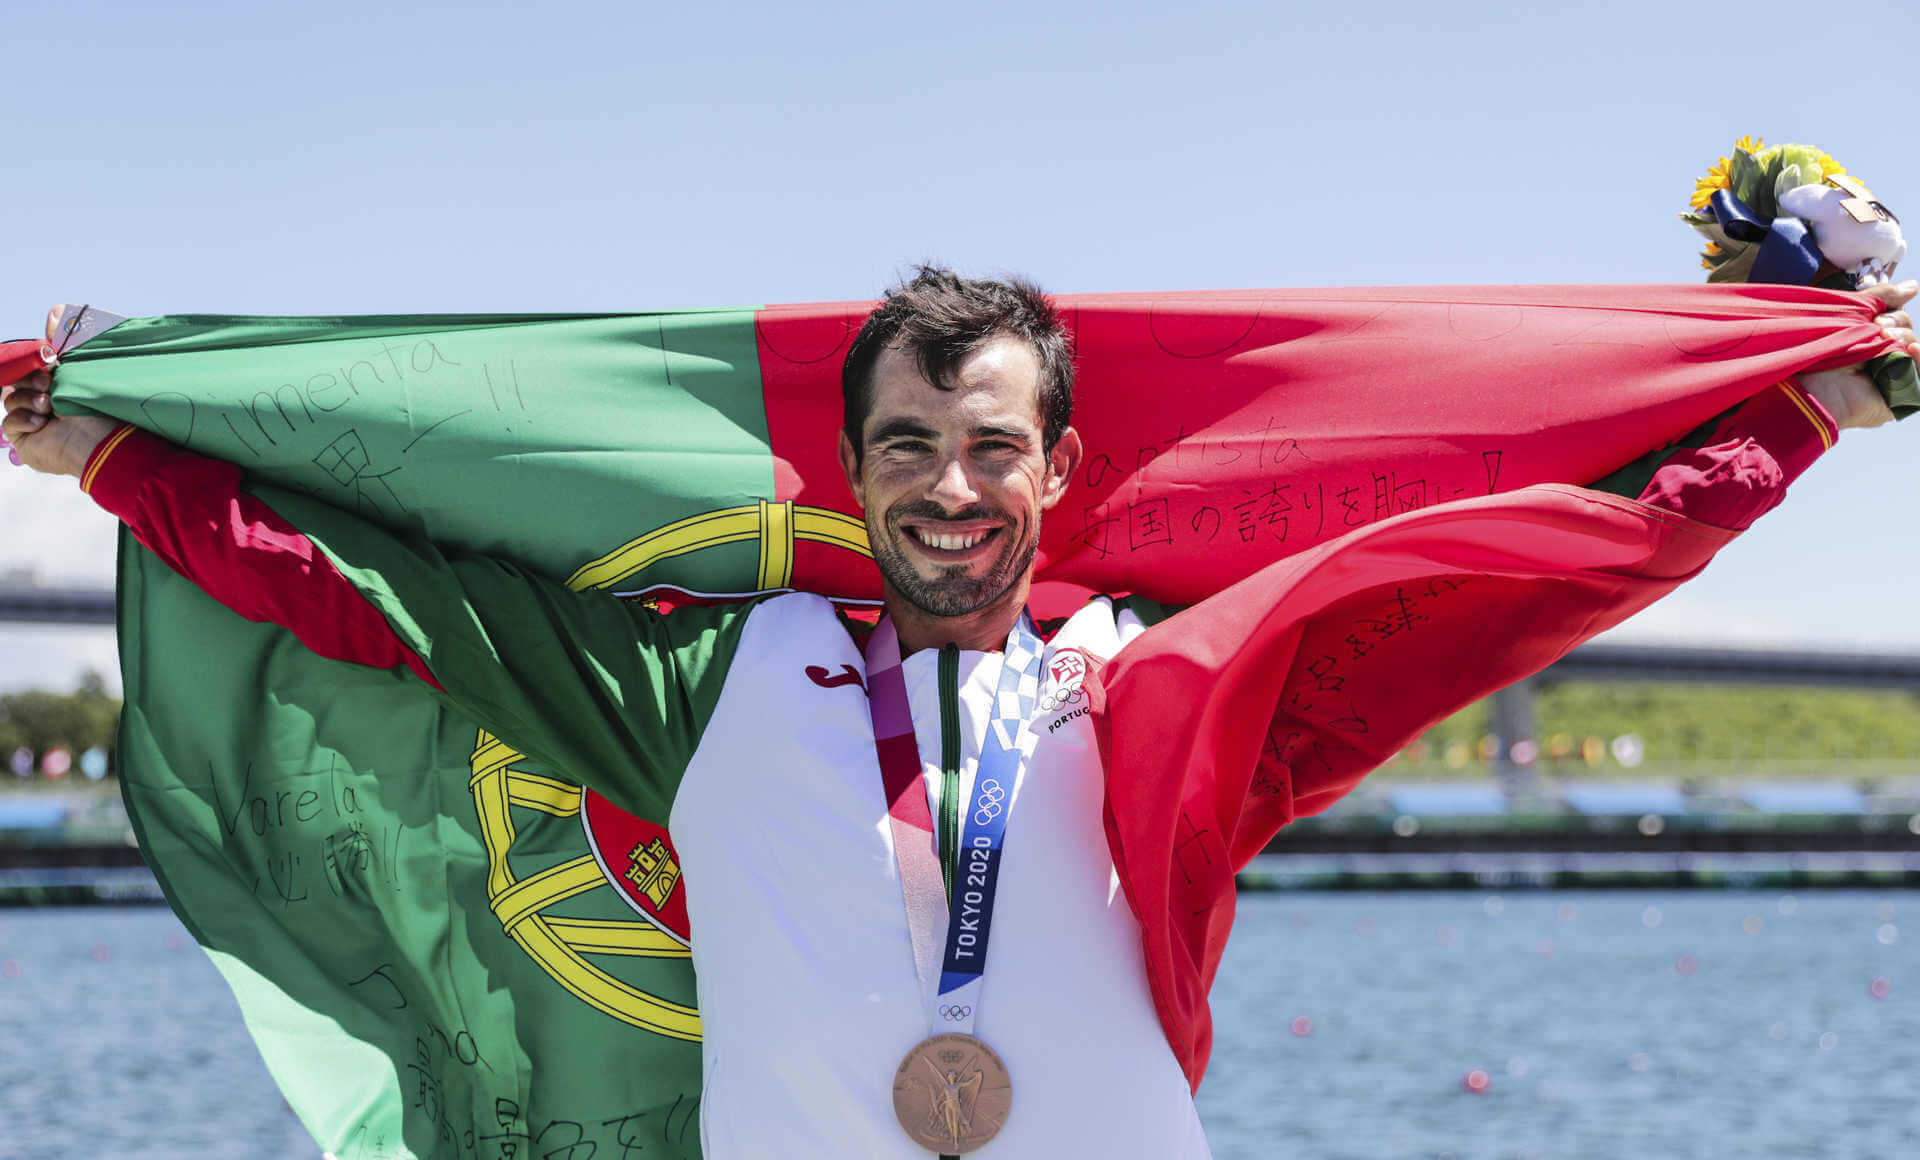 Fernando-Pimenta-conquista-medalha-de-bronze-milenio-stadium-desporto